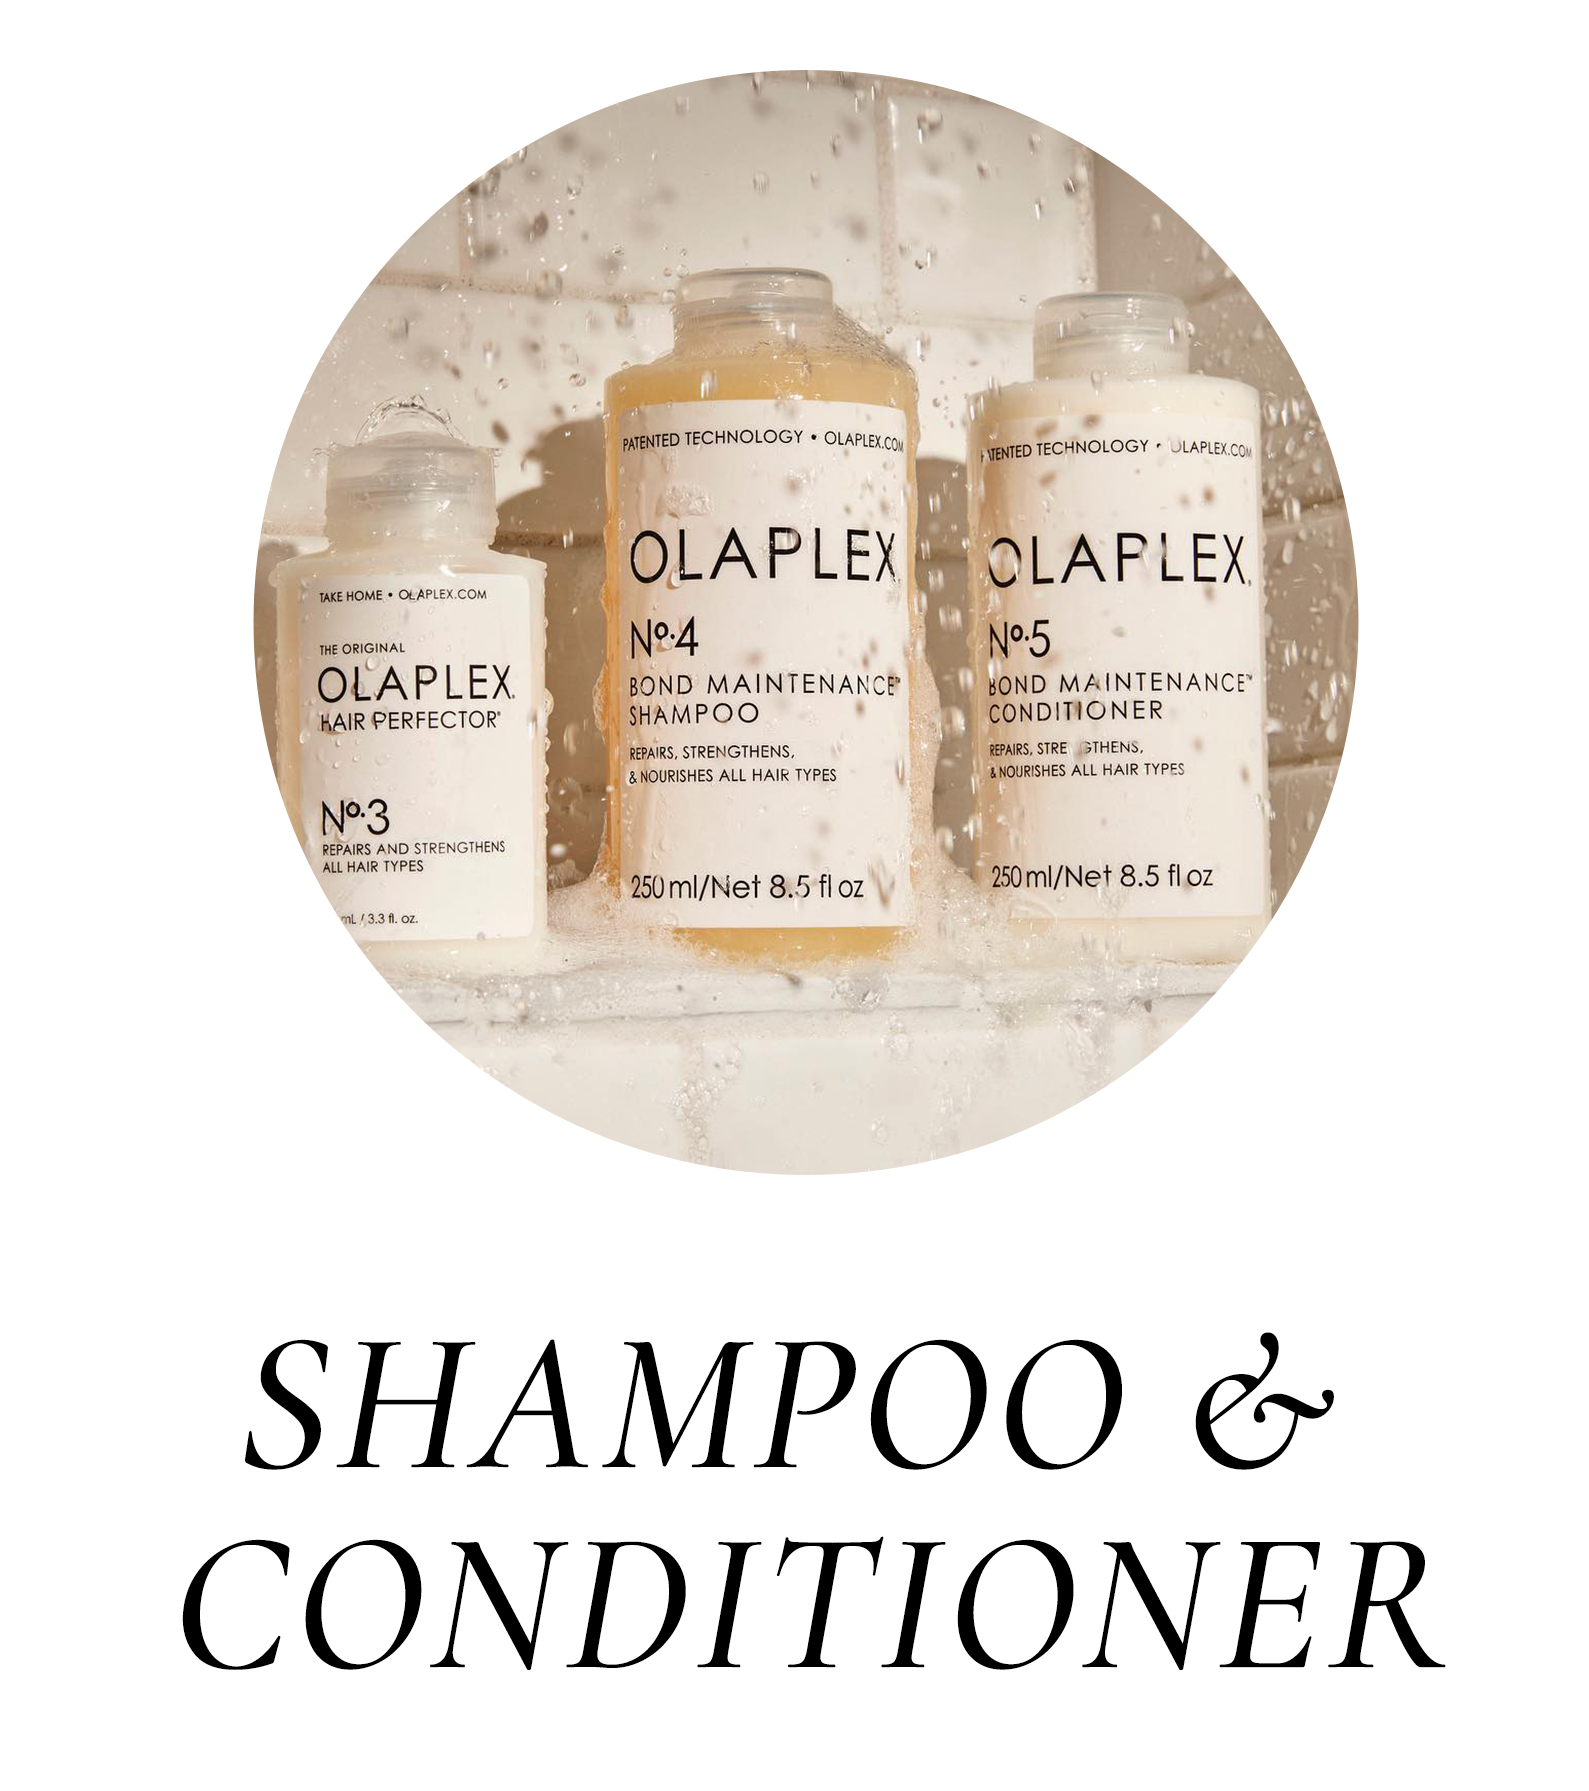 Shampoo & conditioner